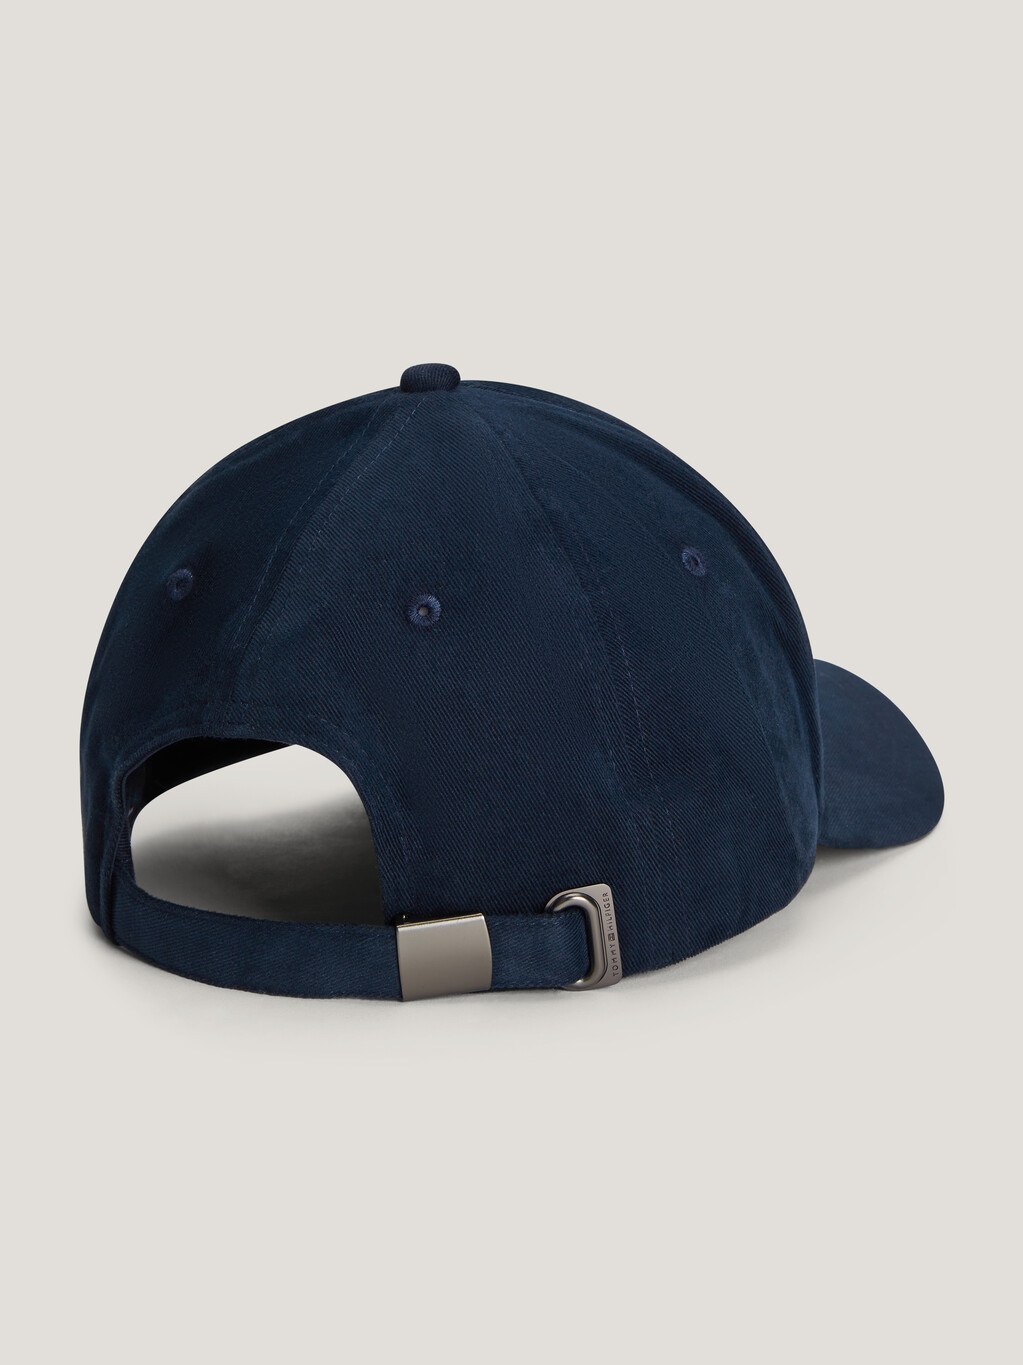 Corporate Baseball Cap, Space Blue, hi-res